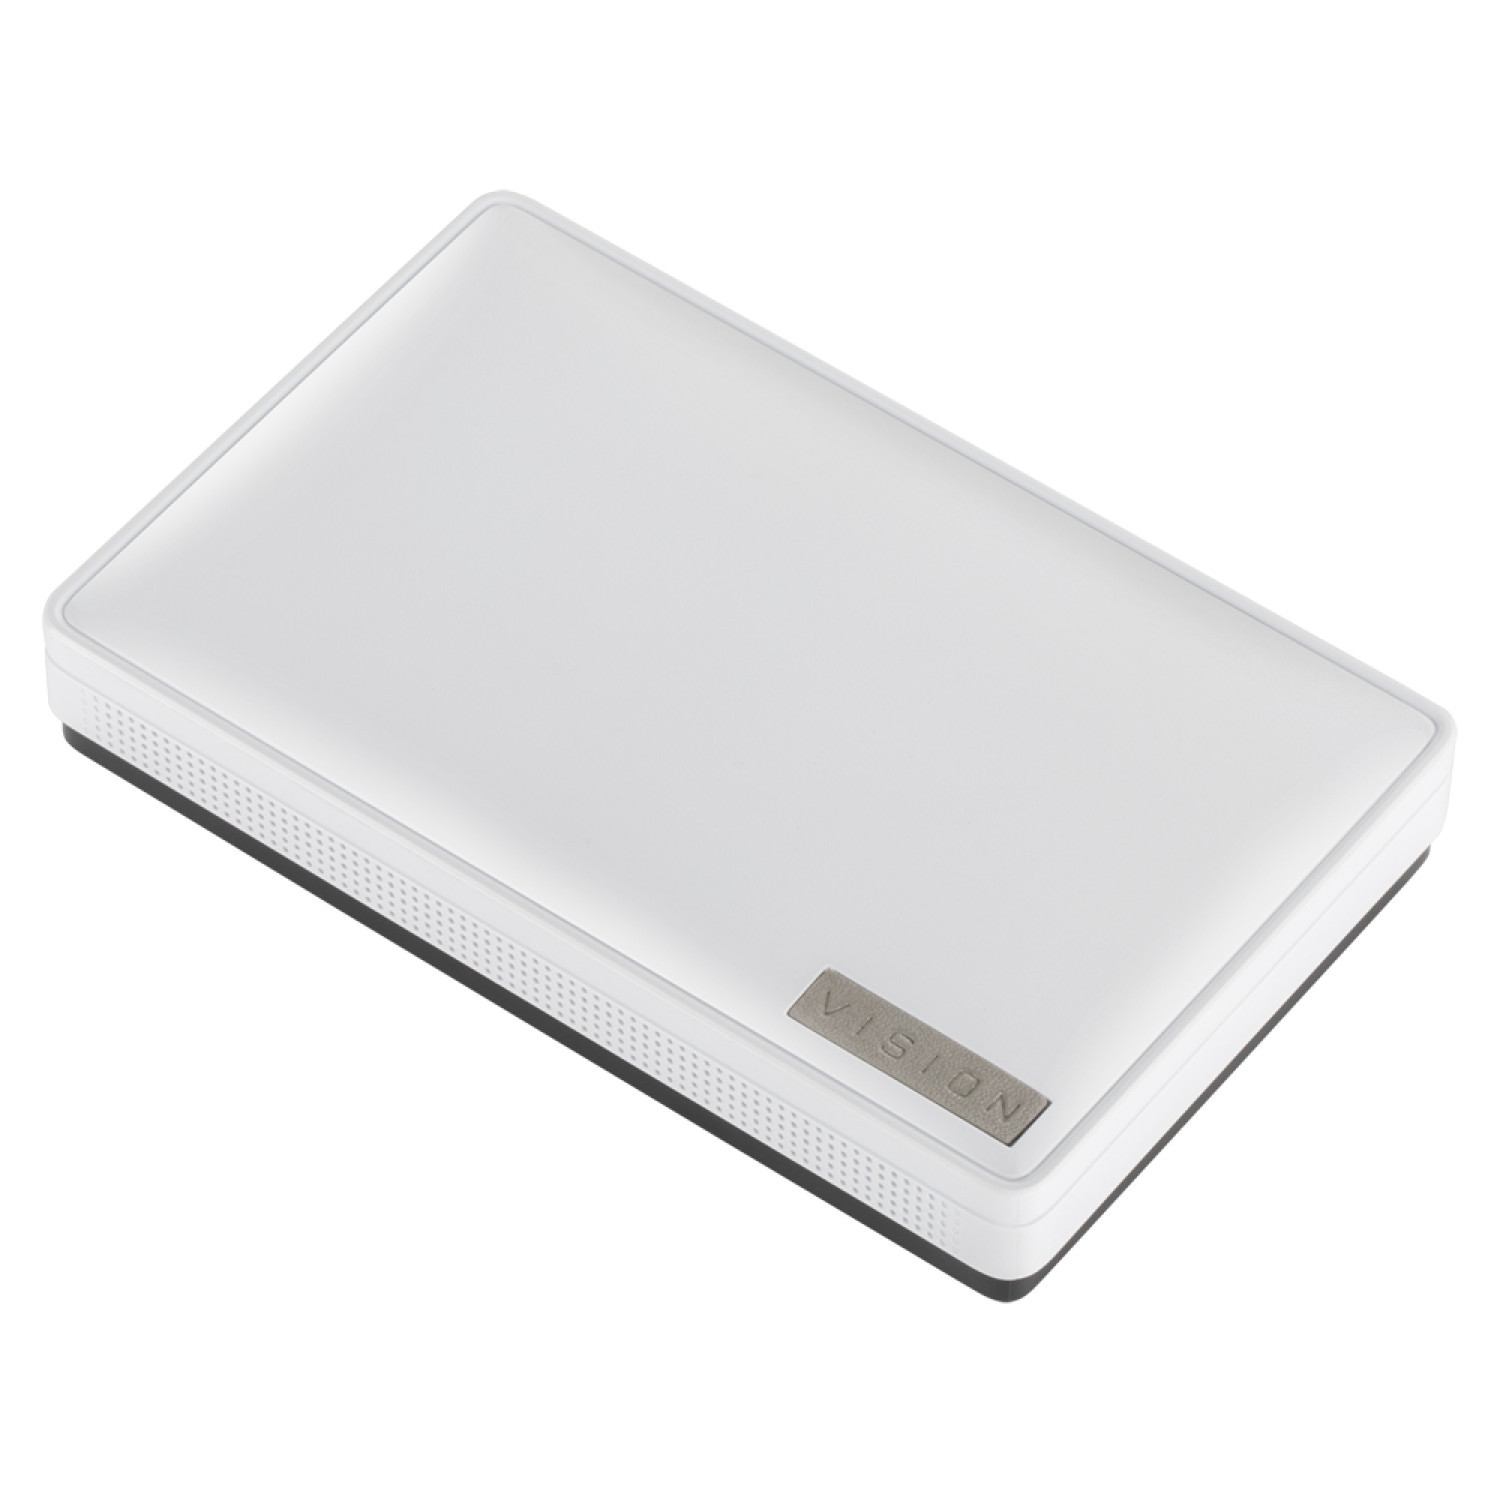 Външен SSD GIGABYTE VISION, 1TB, USB 3.2 Gen2x2 Type-C, Бял